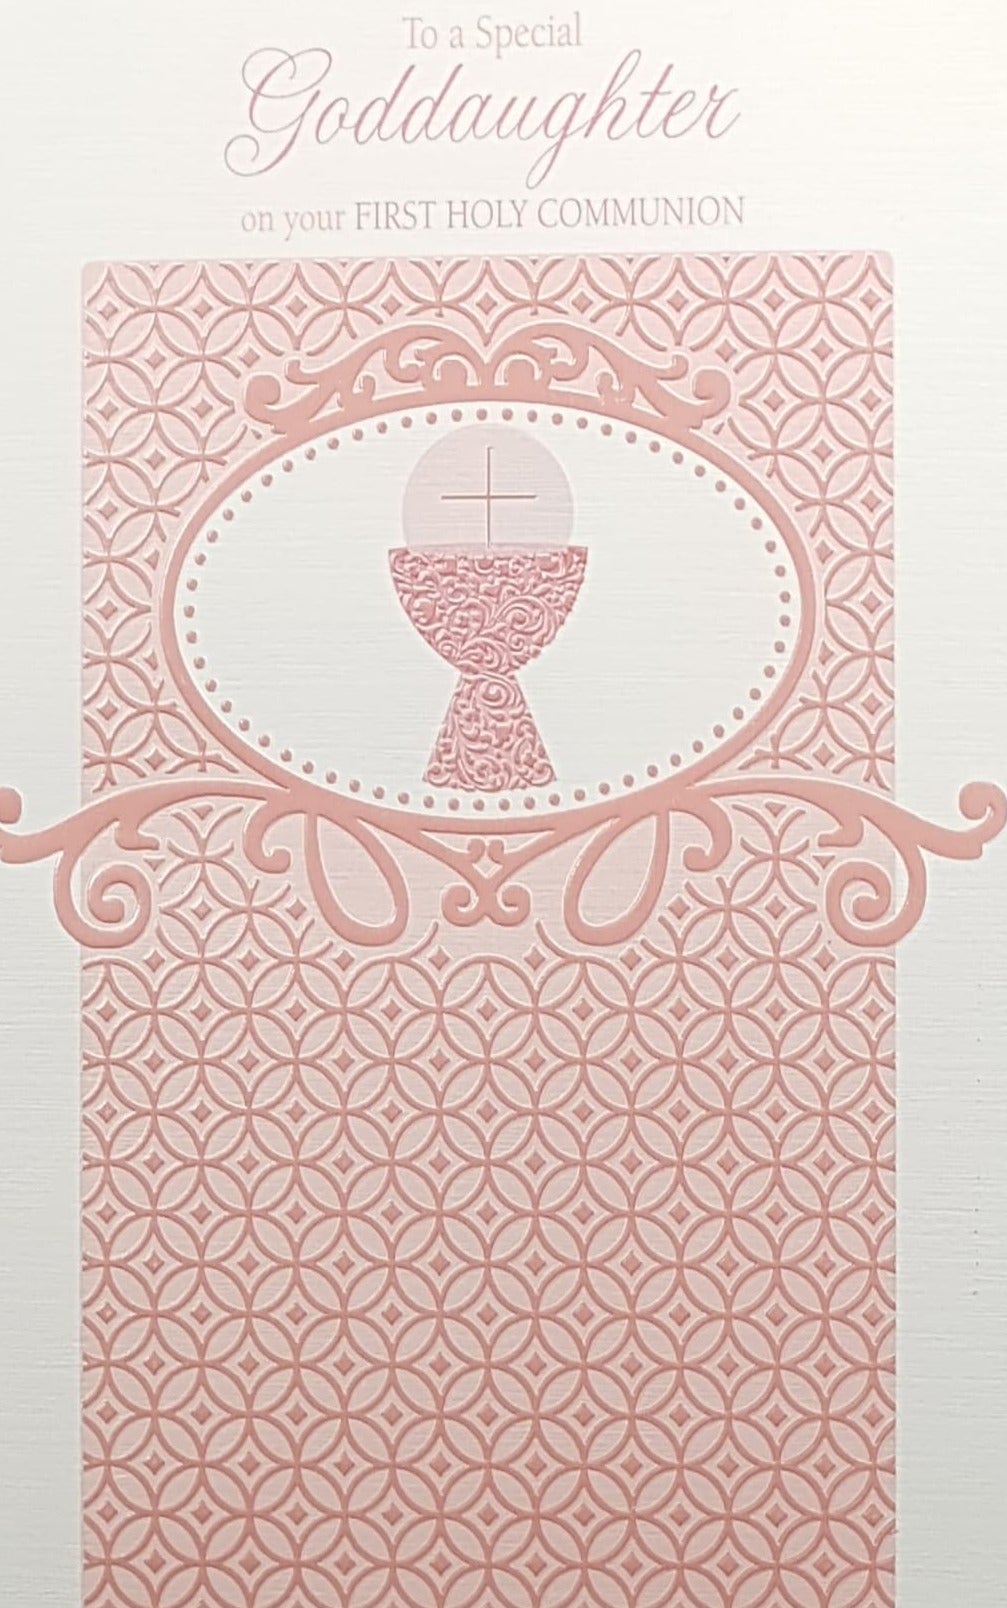 Communion Card - Goddaughter / A Pink Patterned Design